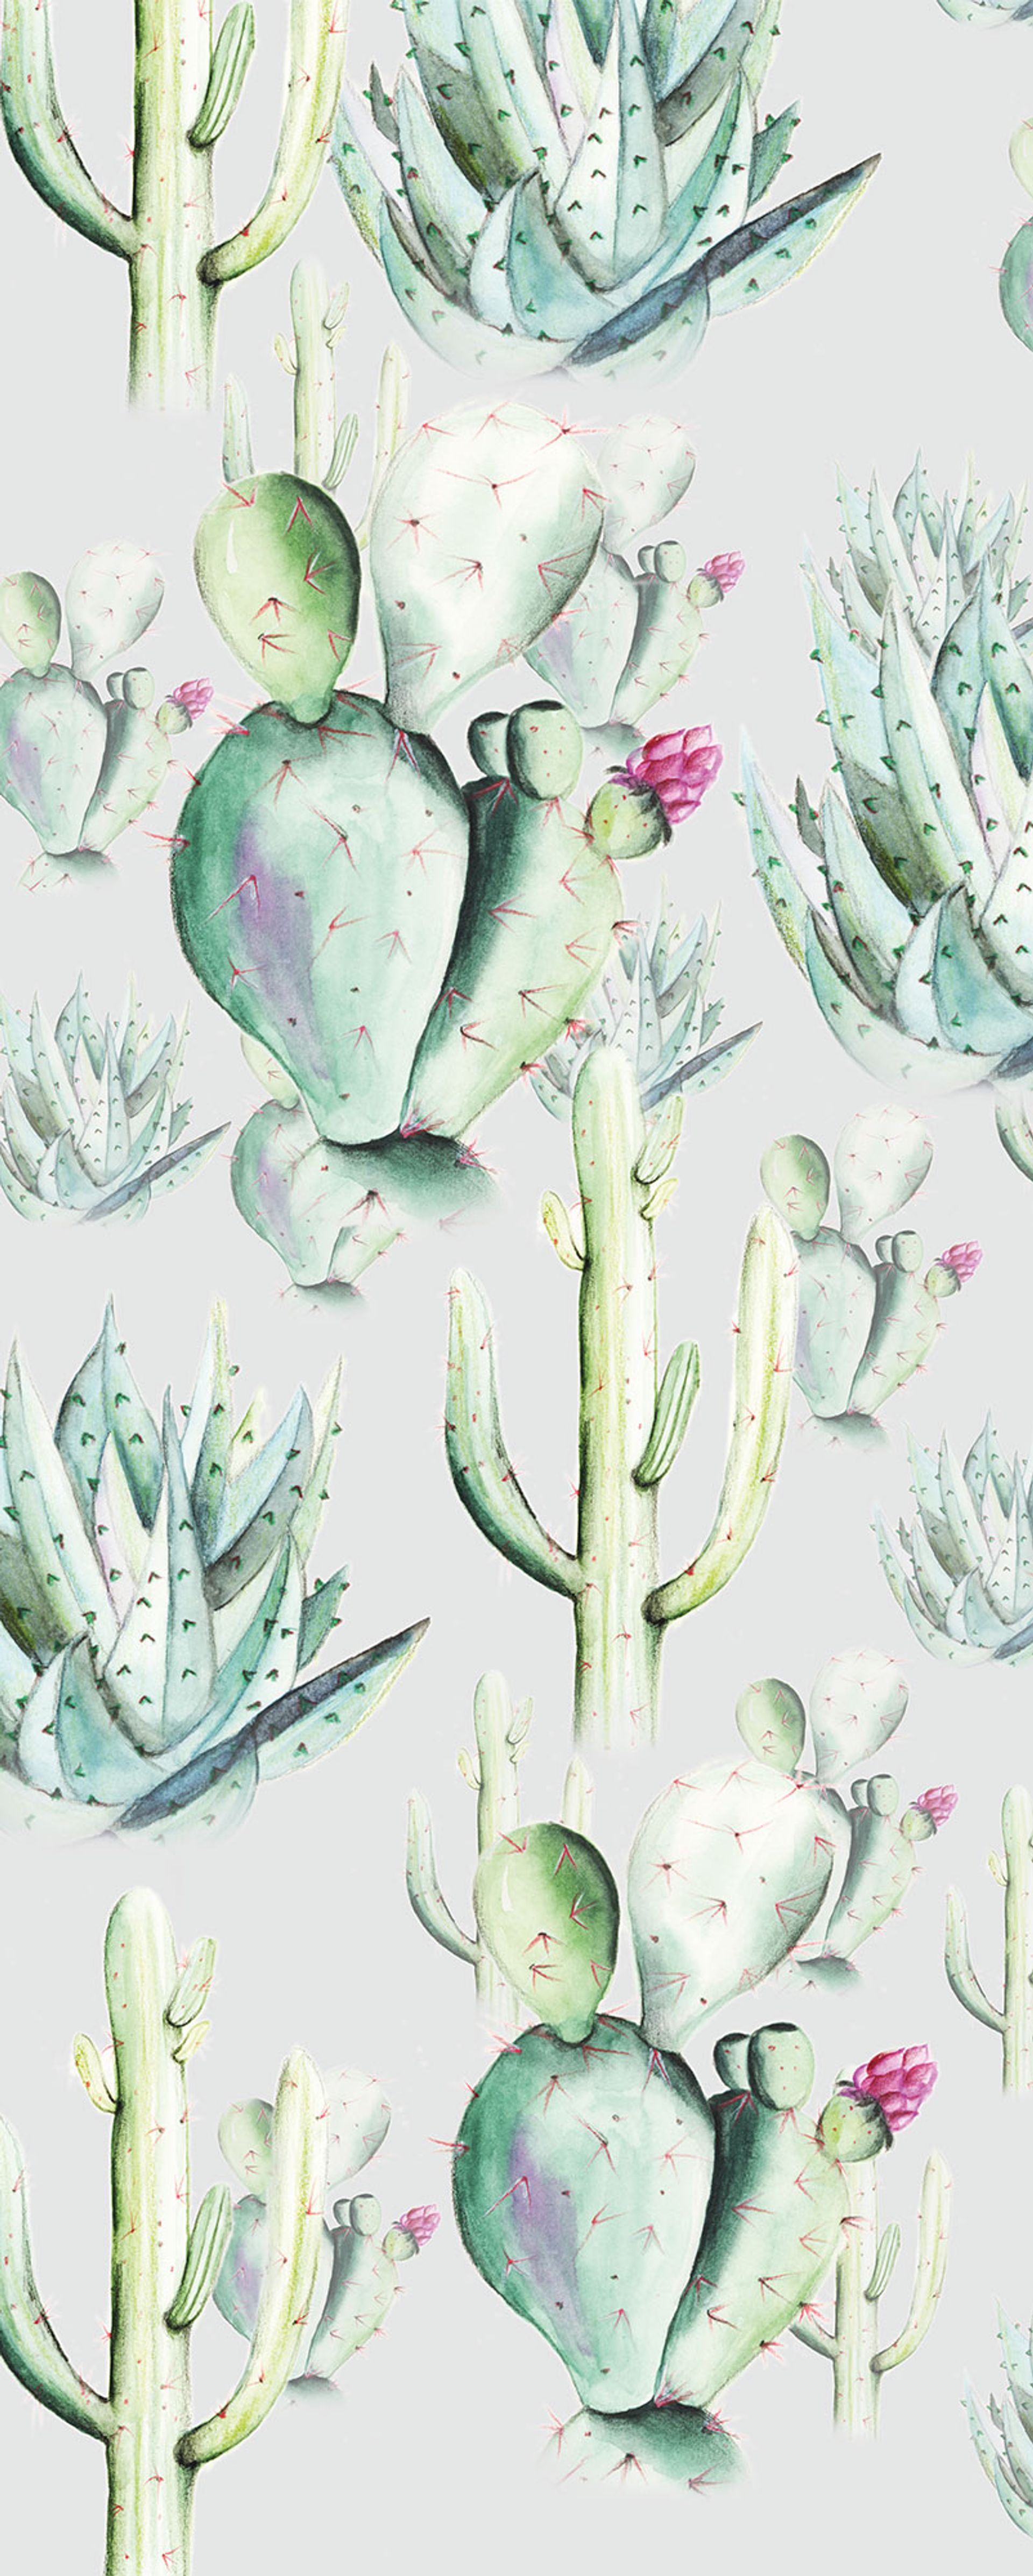 Vlies Fototapete - Cactus Grey Panel - Größe 100 x 250 cm